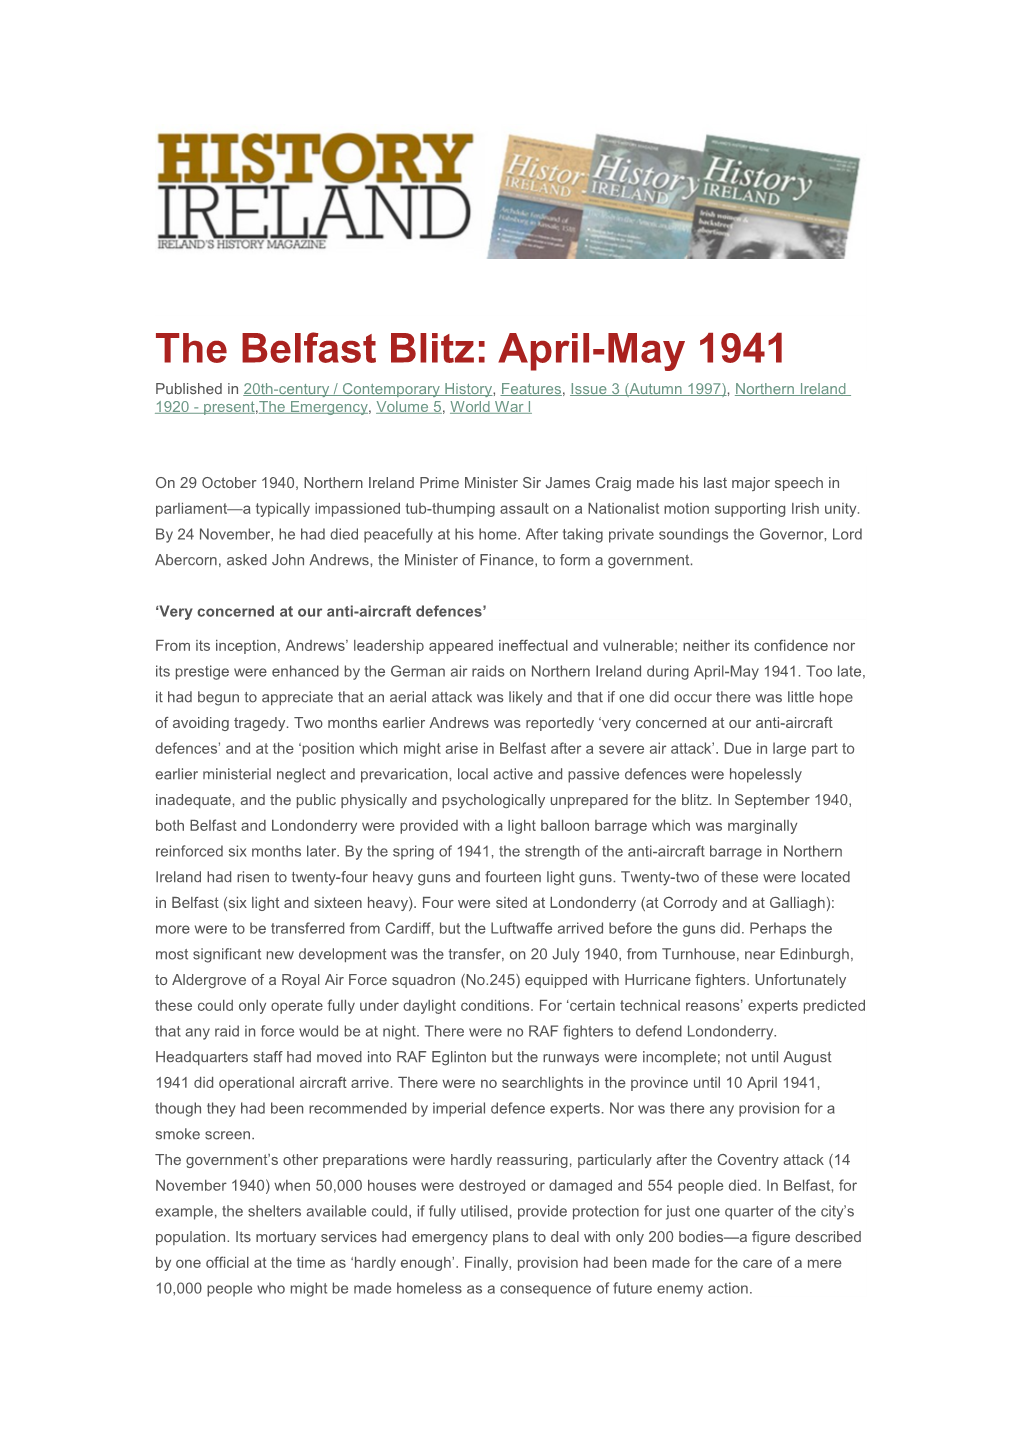 The Belfast Blitz: April-May 1941